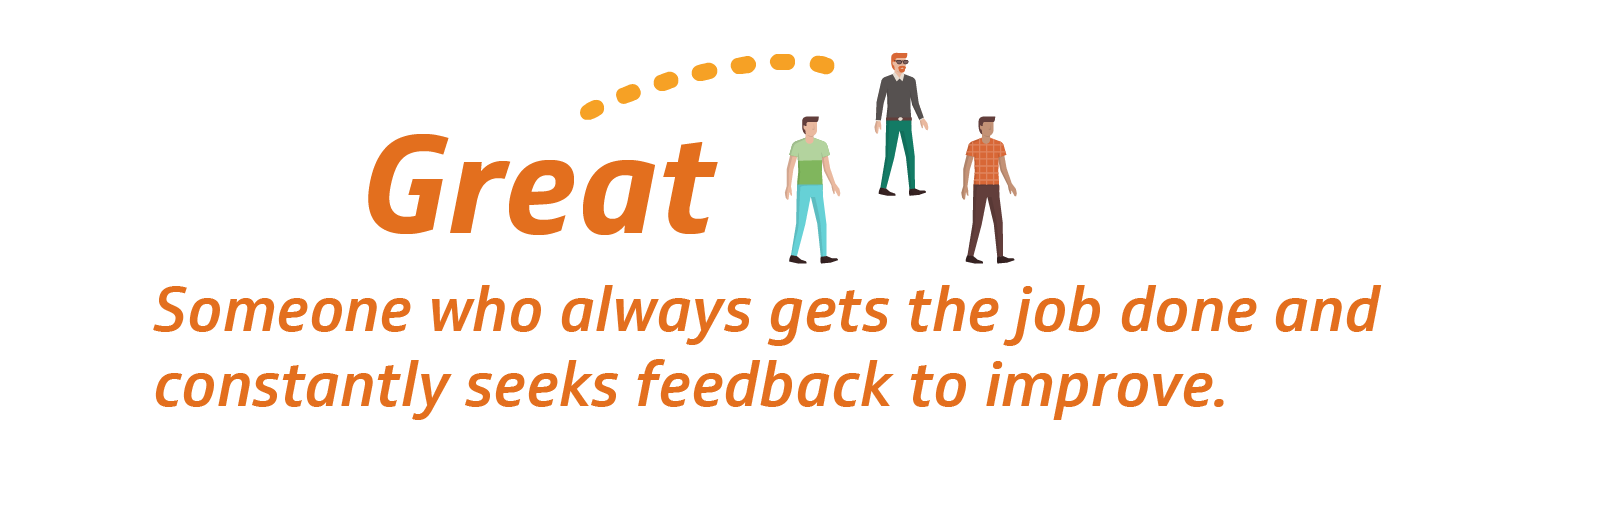 Great work performace- always seeking feedback